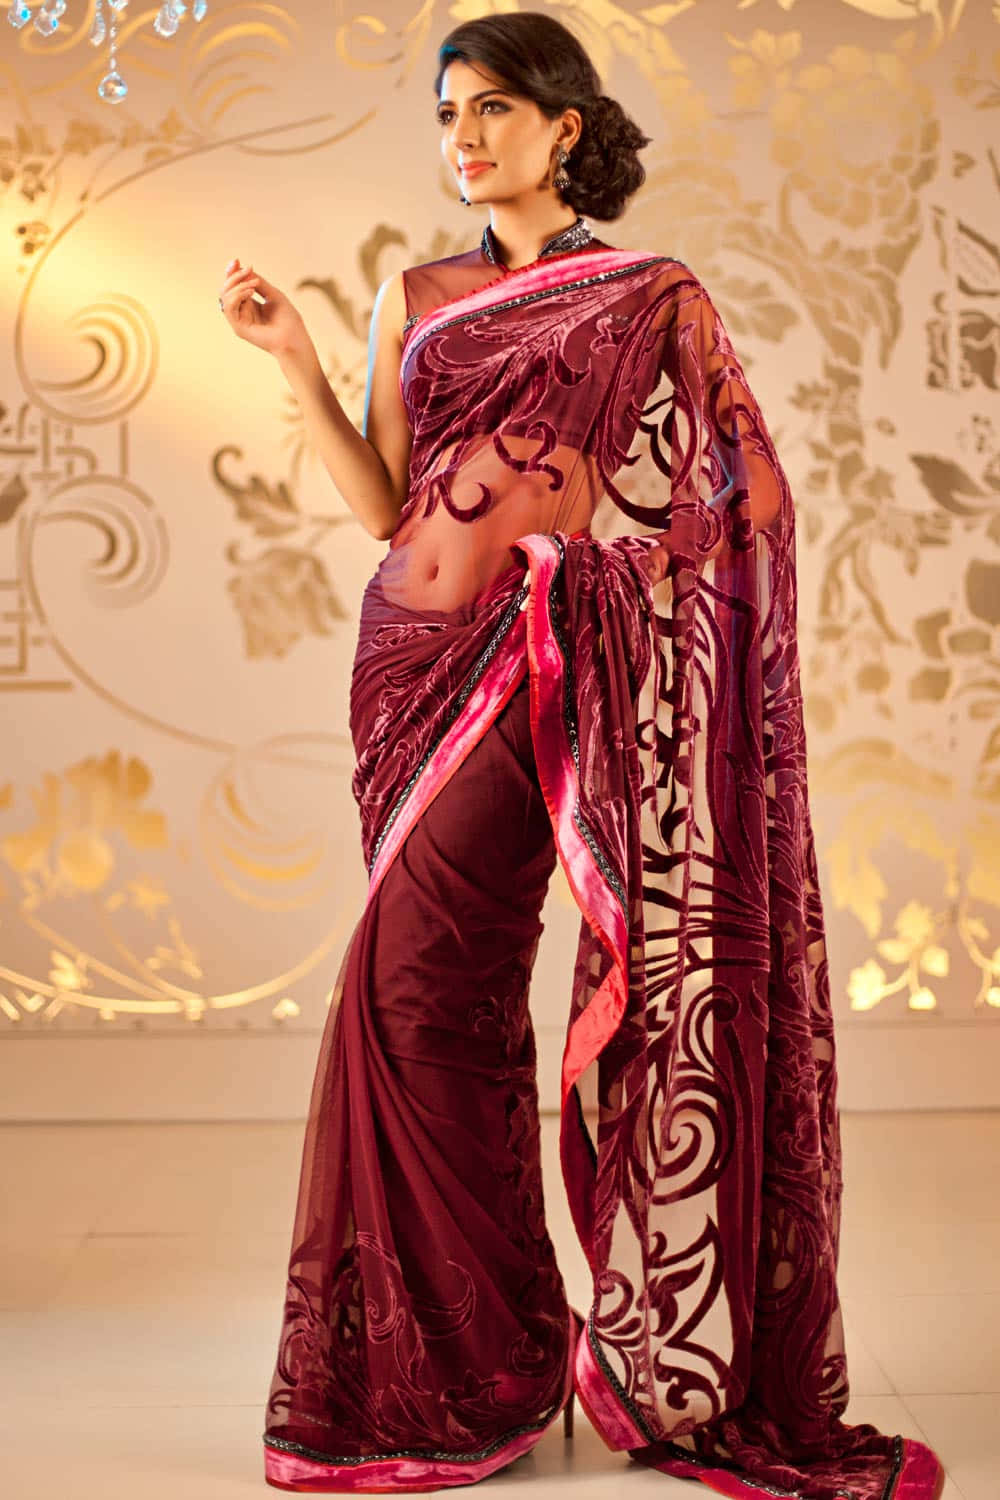 This graceful woman is wearing an elegantly draped saree.